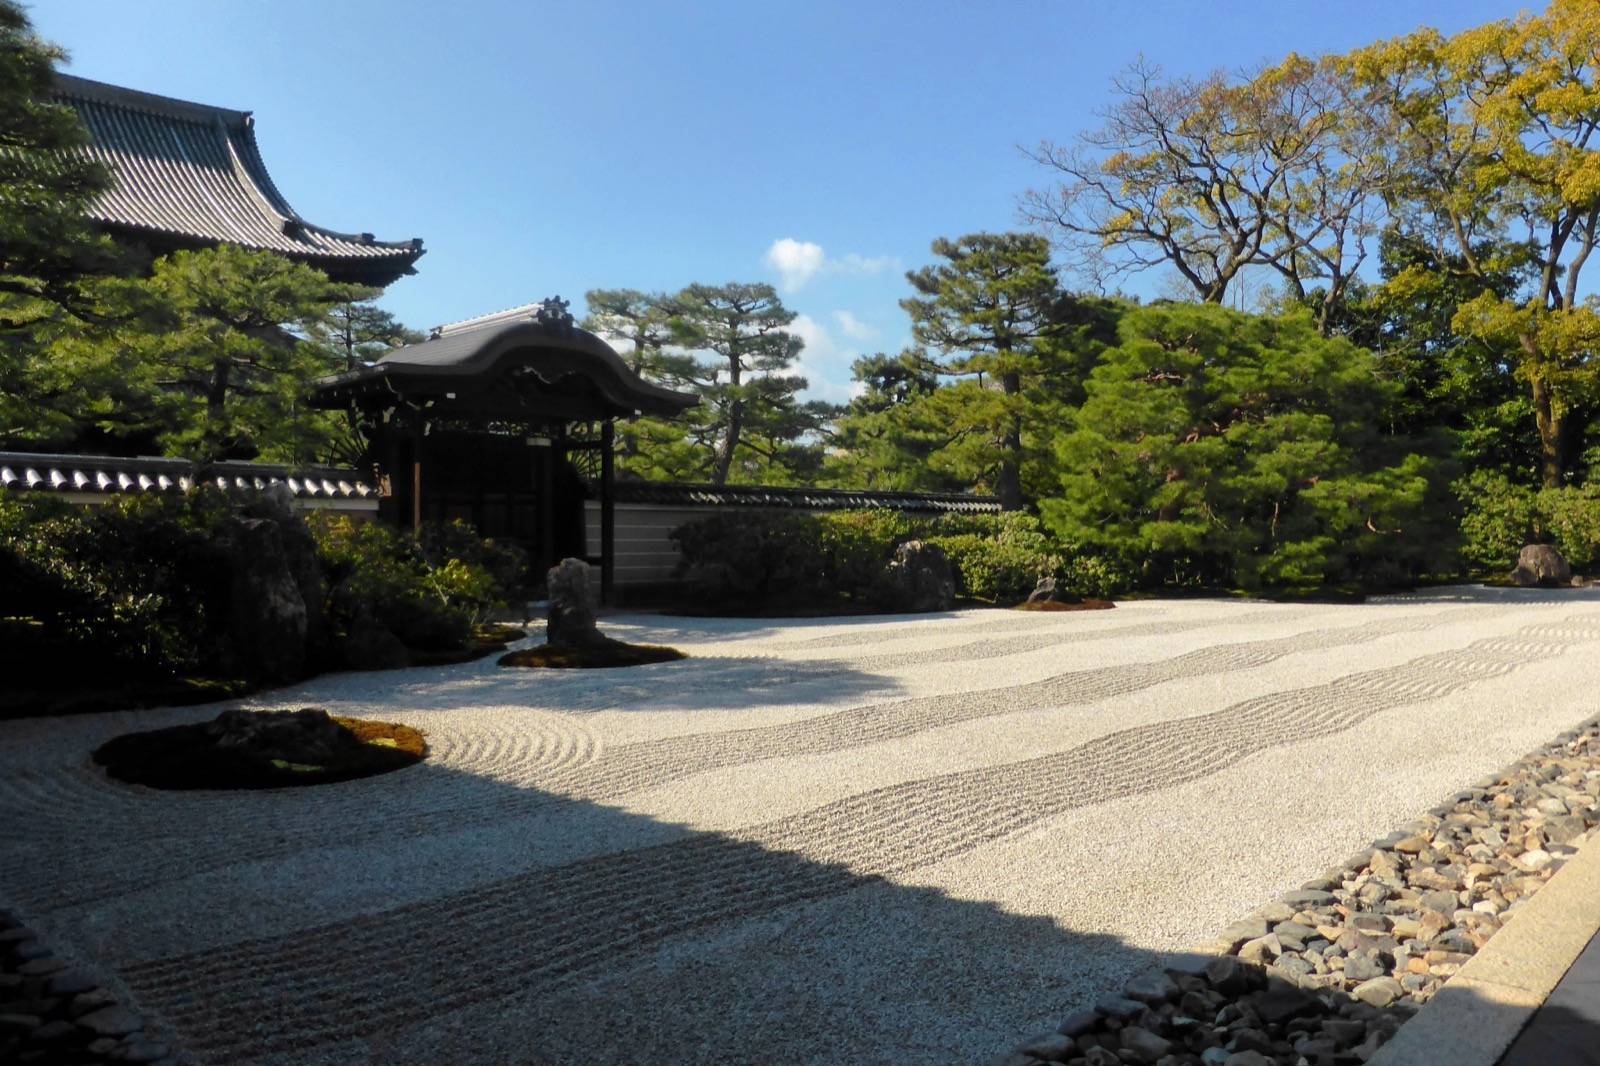 Photo of Kenninji Temple, Japan (Kennin-ji, Daio-en (Garden) -1 (February 2017) by Tetsuhiro Terada)